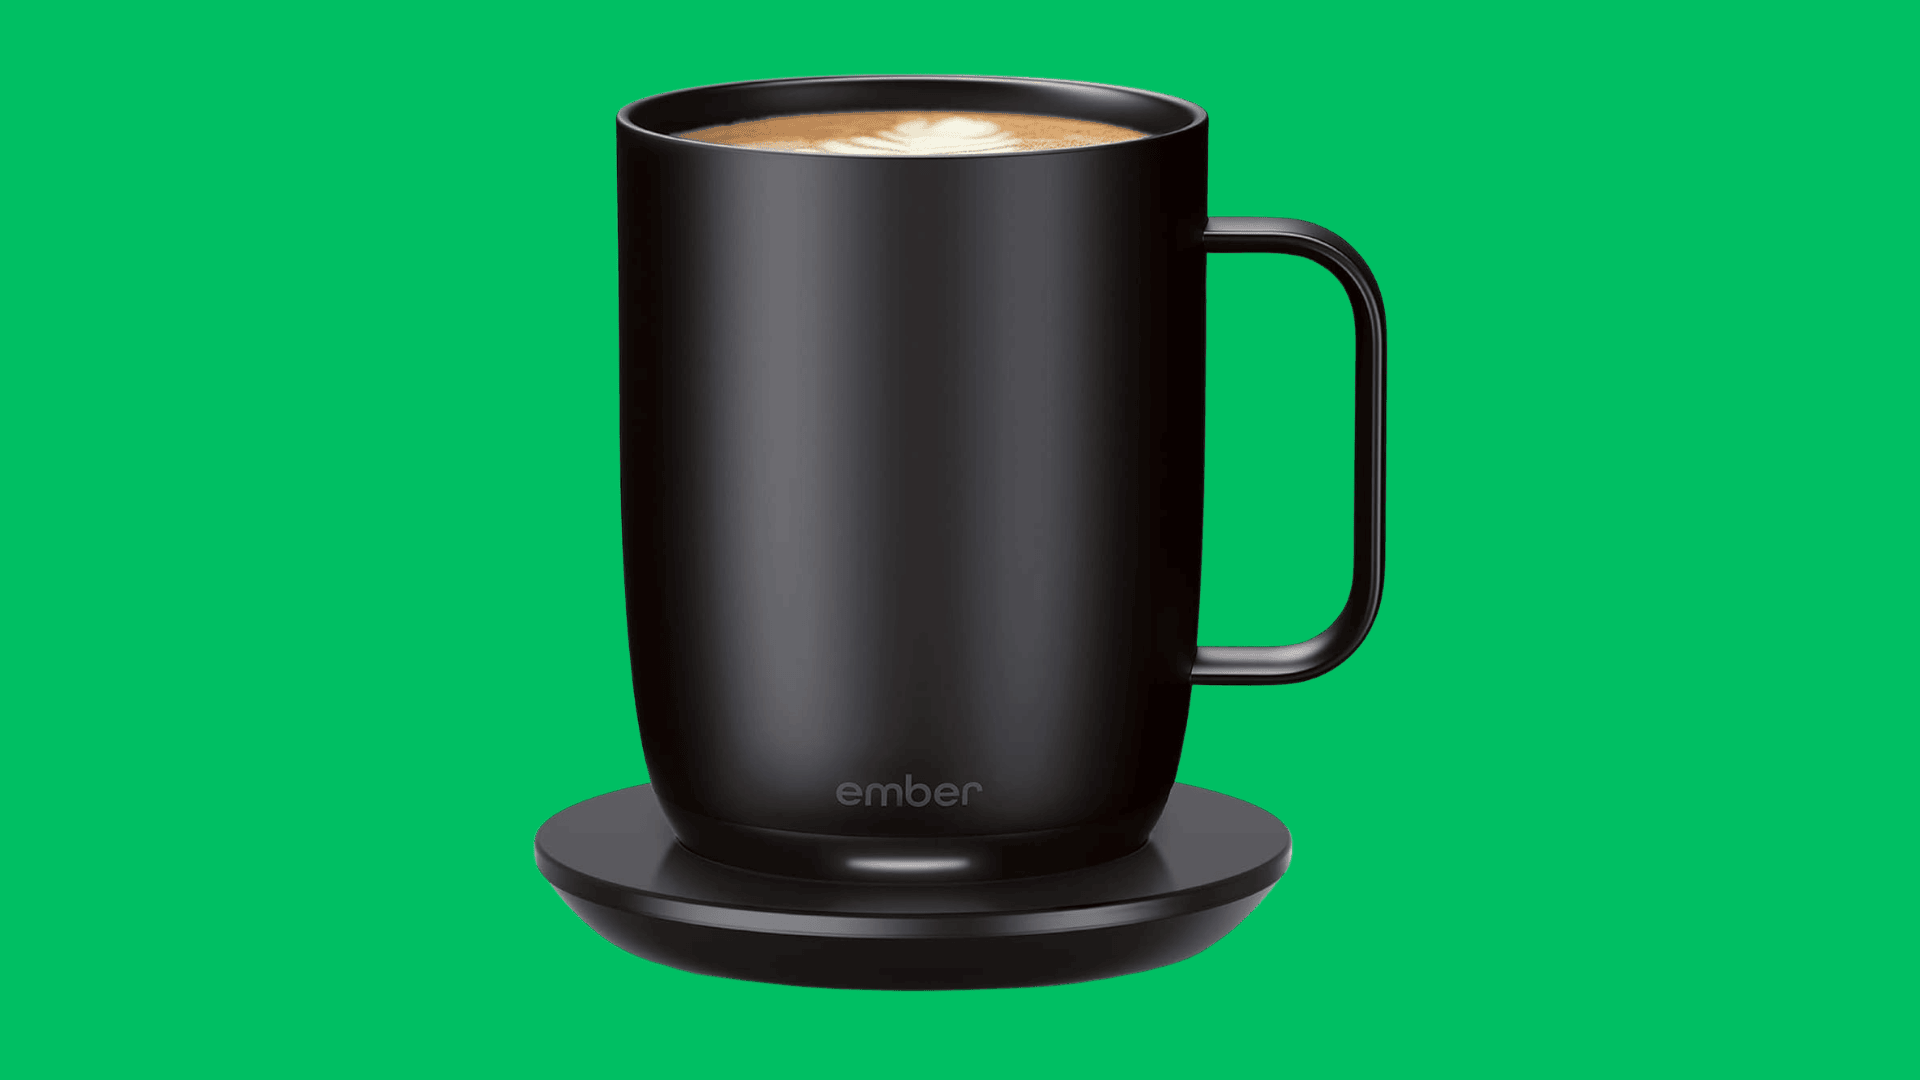 Ember temperature control coffee mug